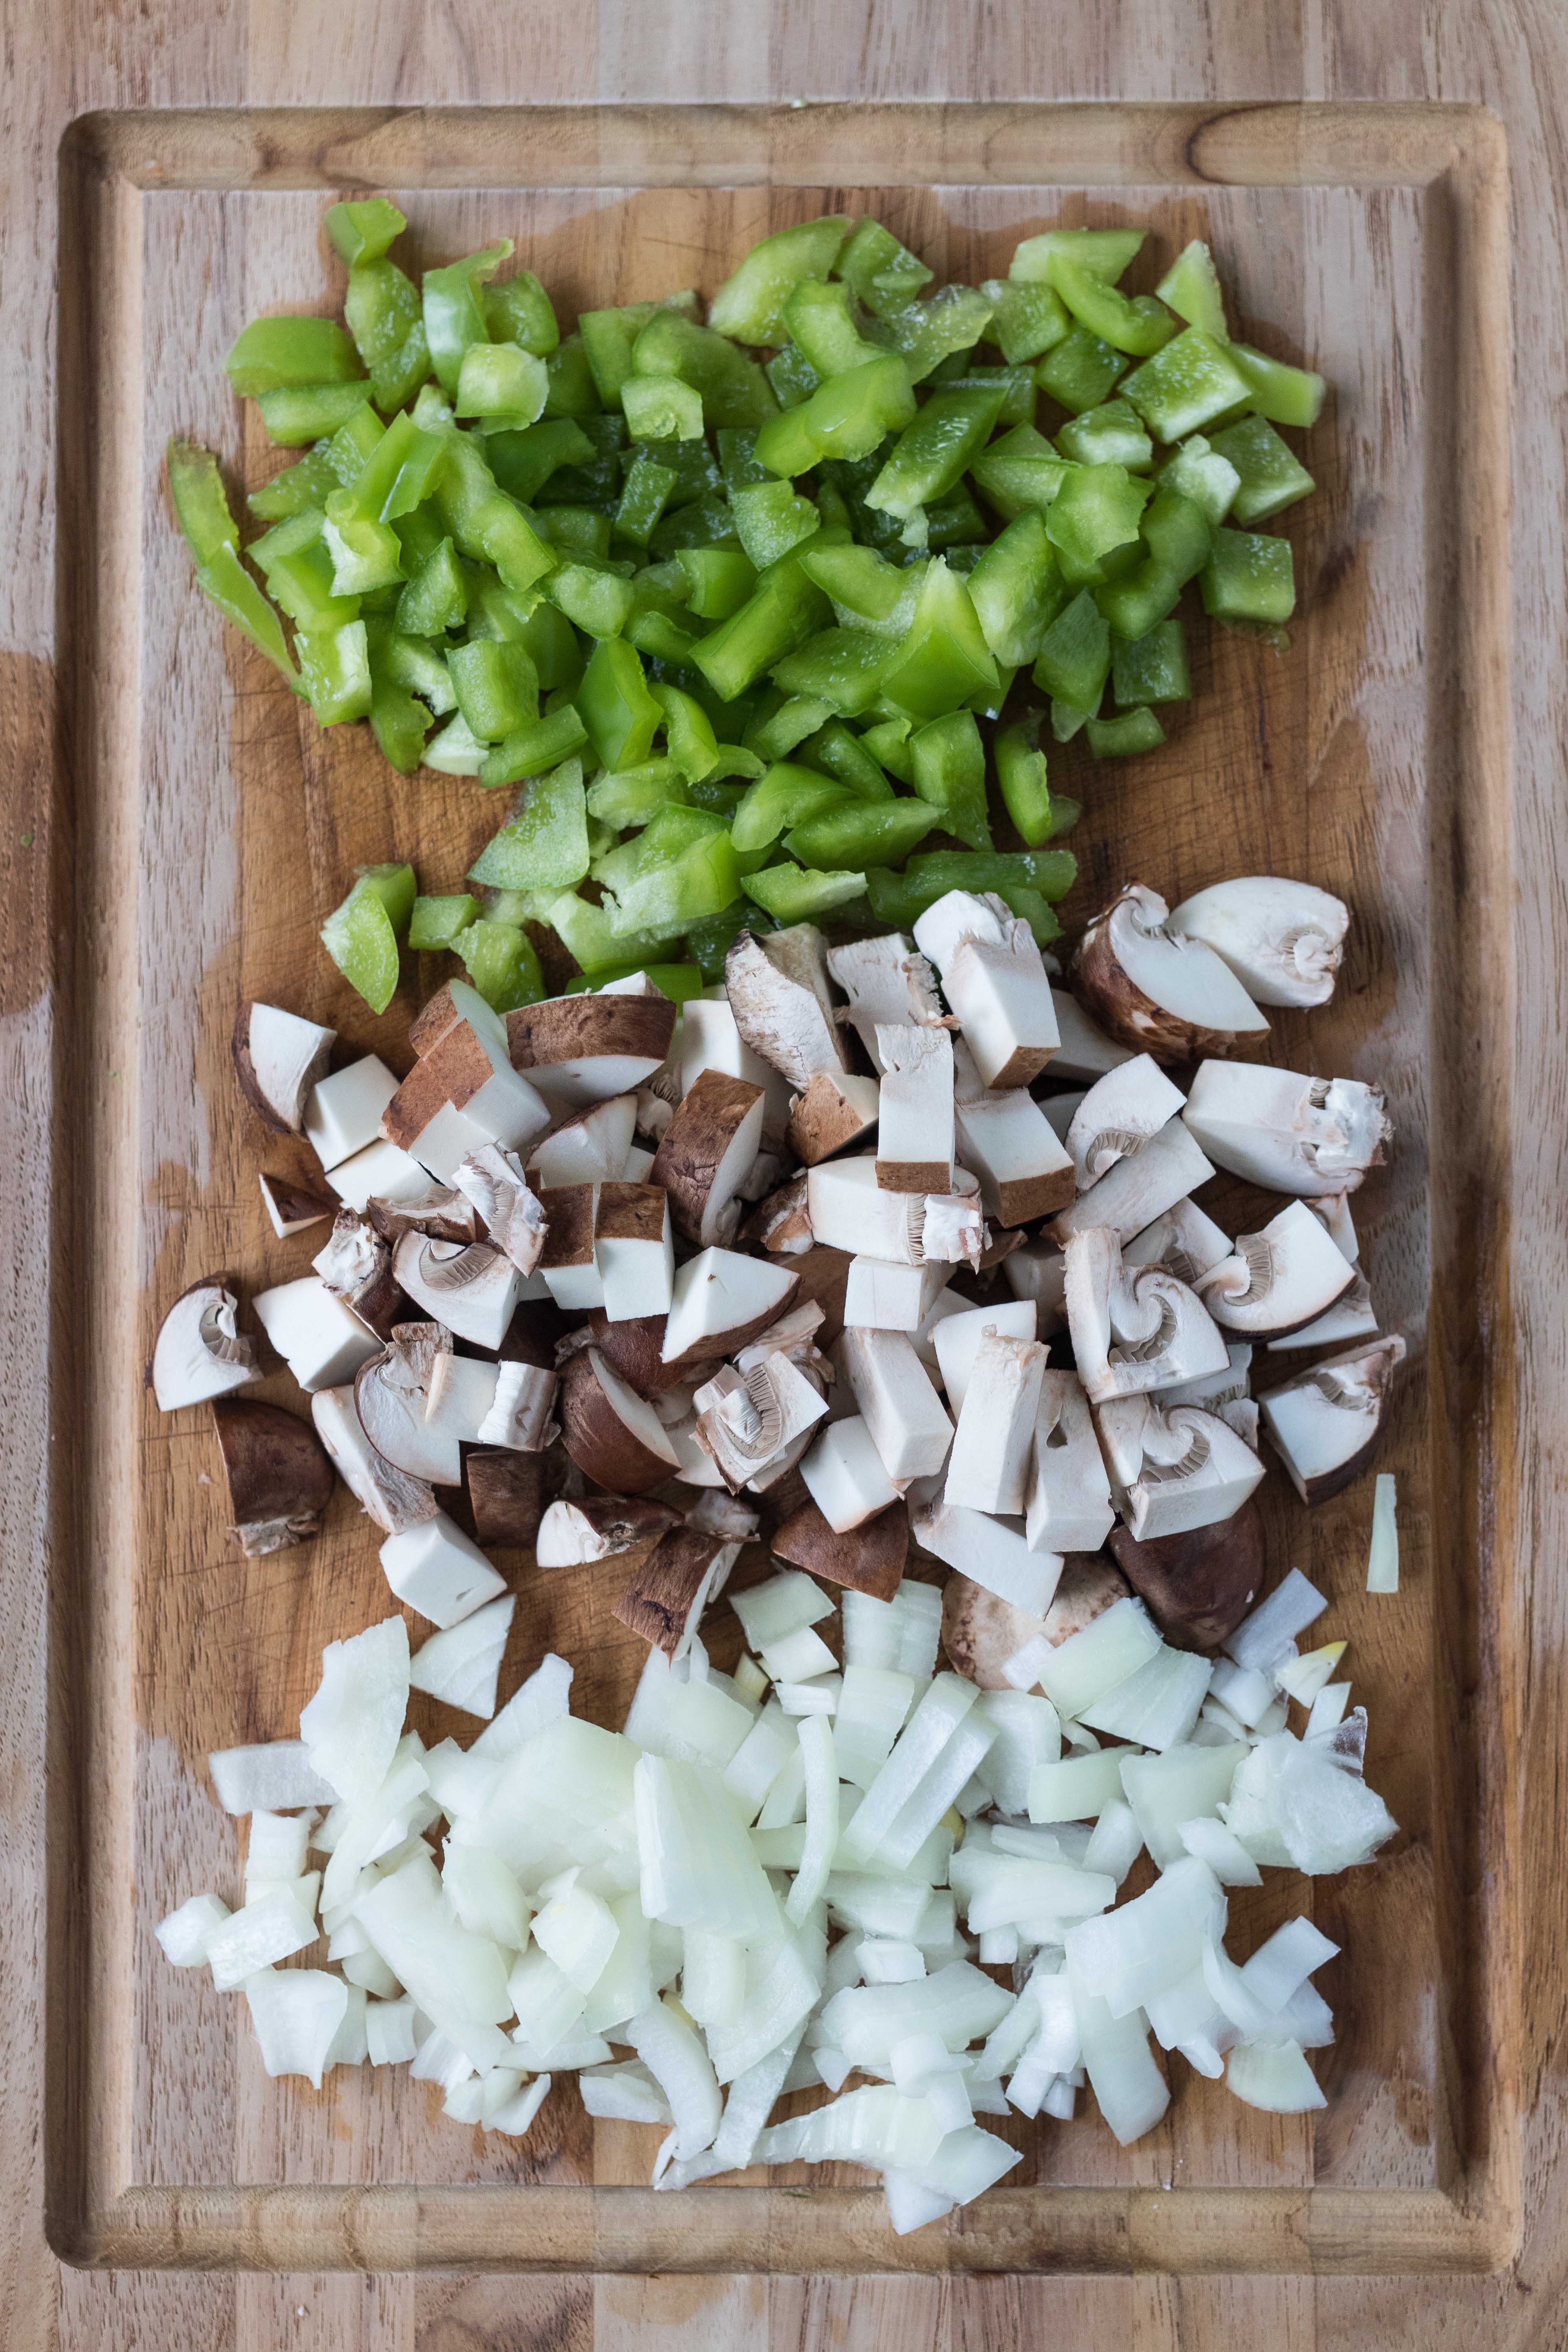 Diced green pepper, mushroom, and onion for homemade supreme pizza. #dicedveggies #homemadepizza #supremepizza | https://www.roseclearfield.com